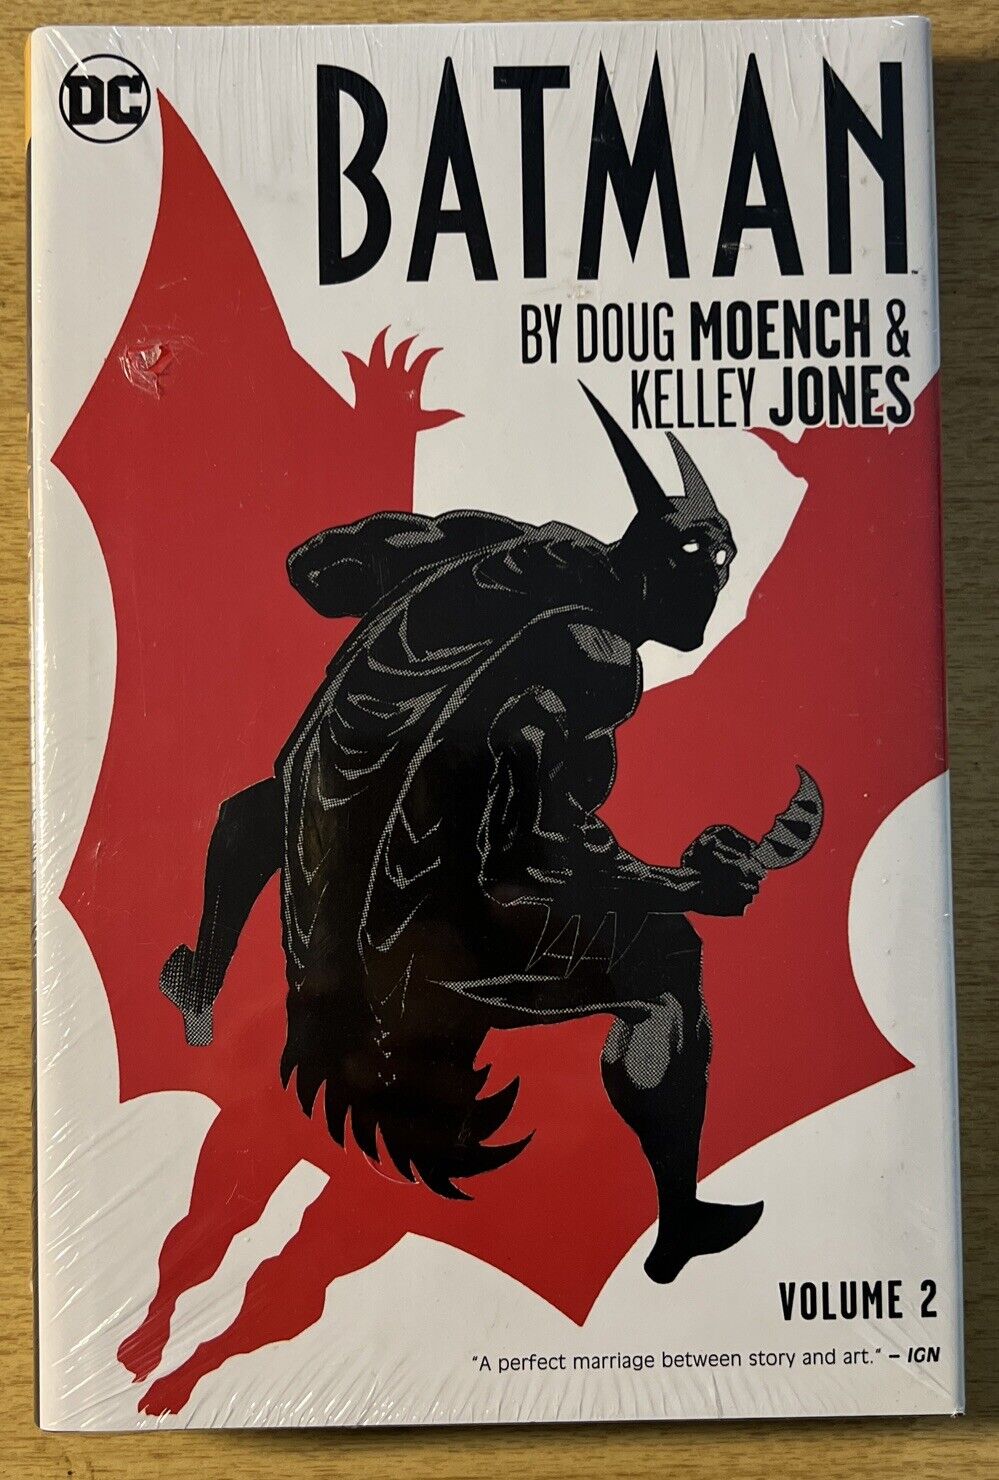 DC Comics - BATMAN: Vol. 2 (2018) by D. Moench & K. Jones - Brand New - Sealed